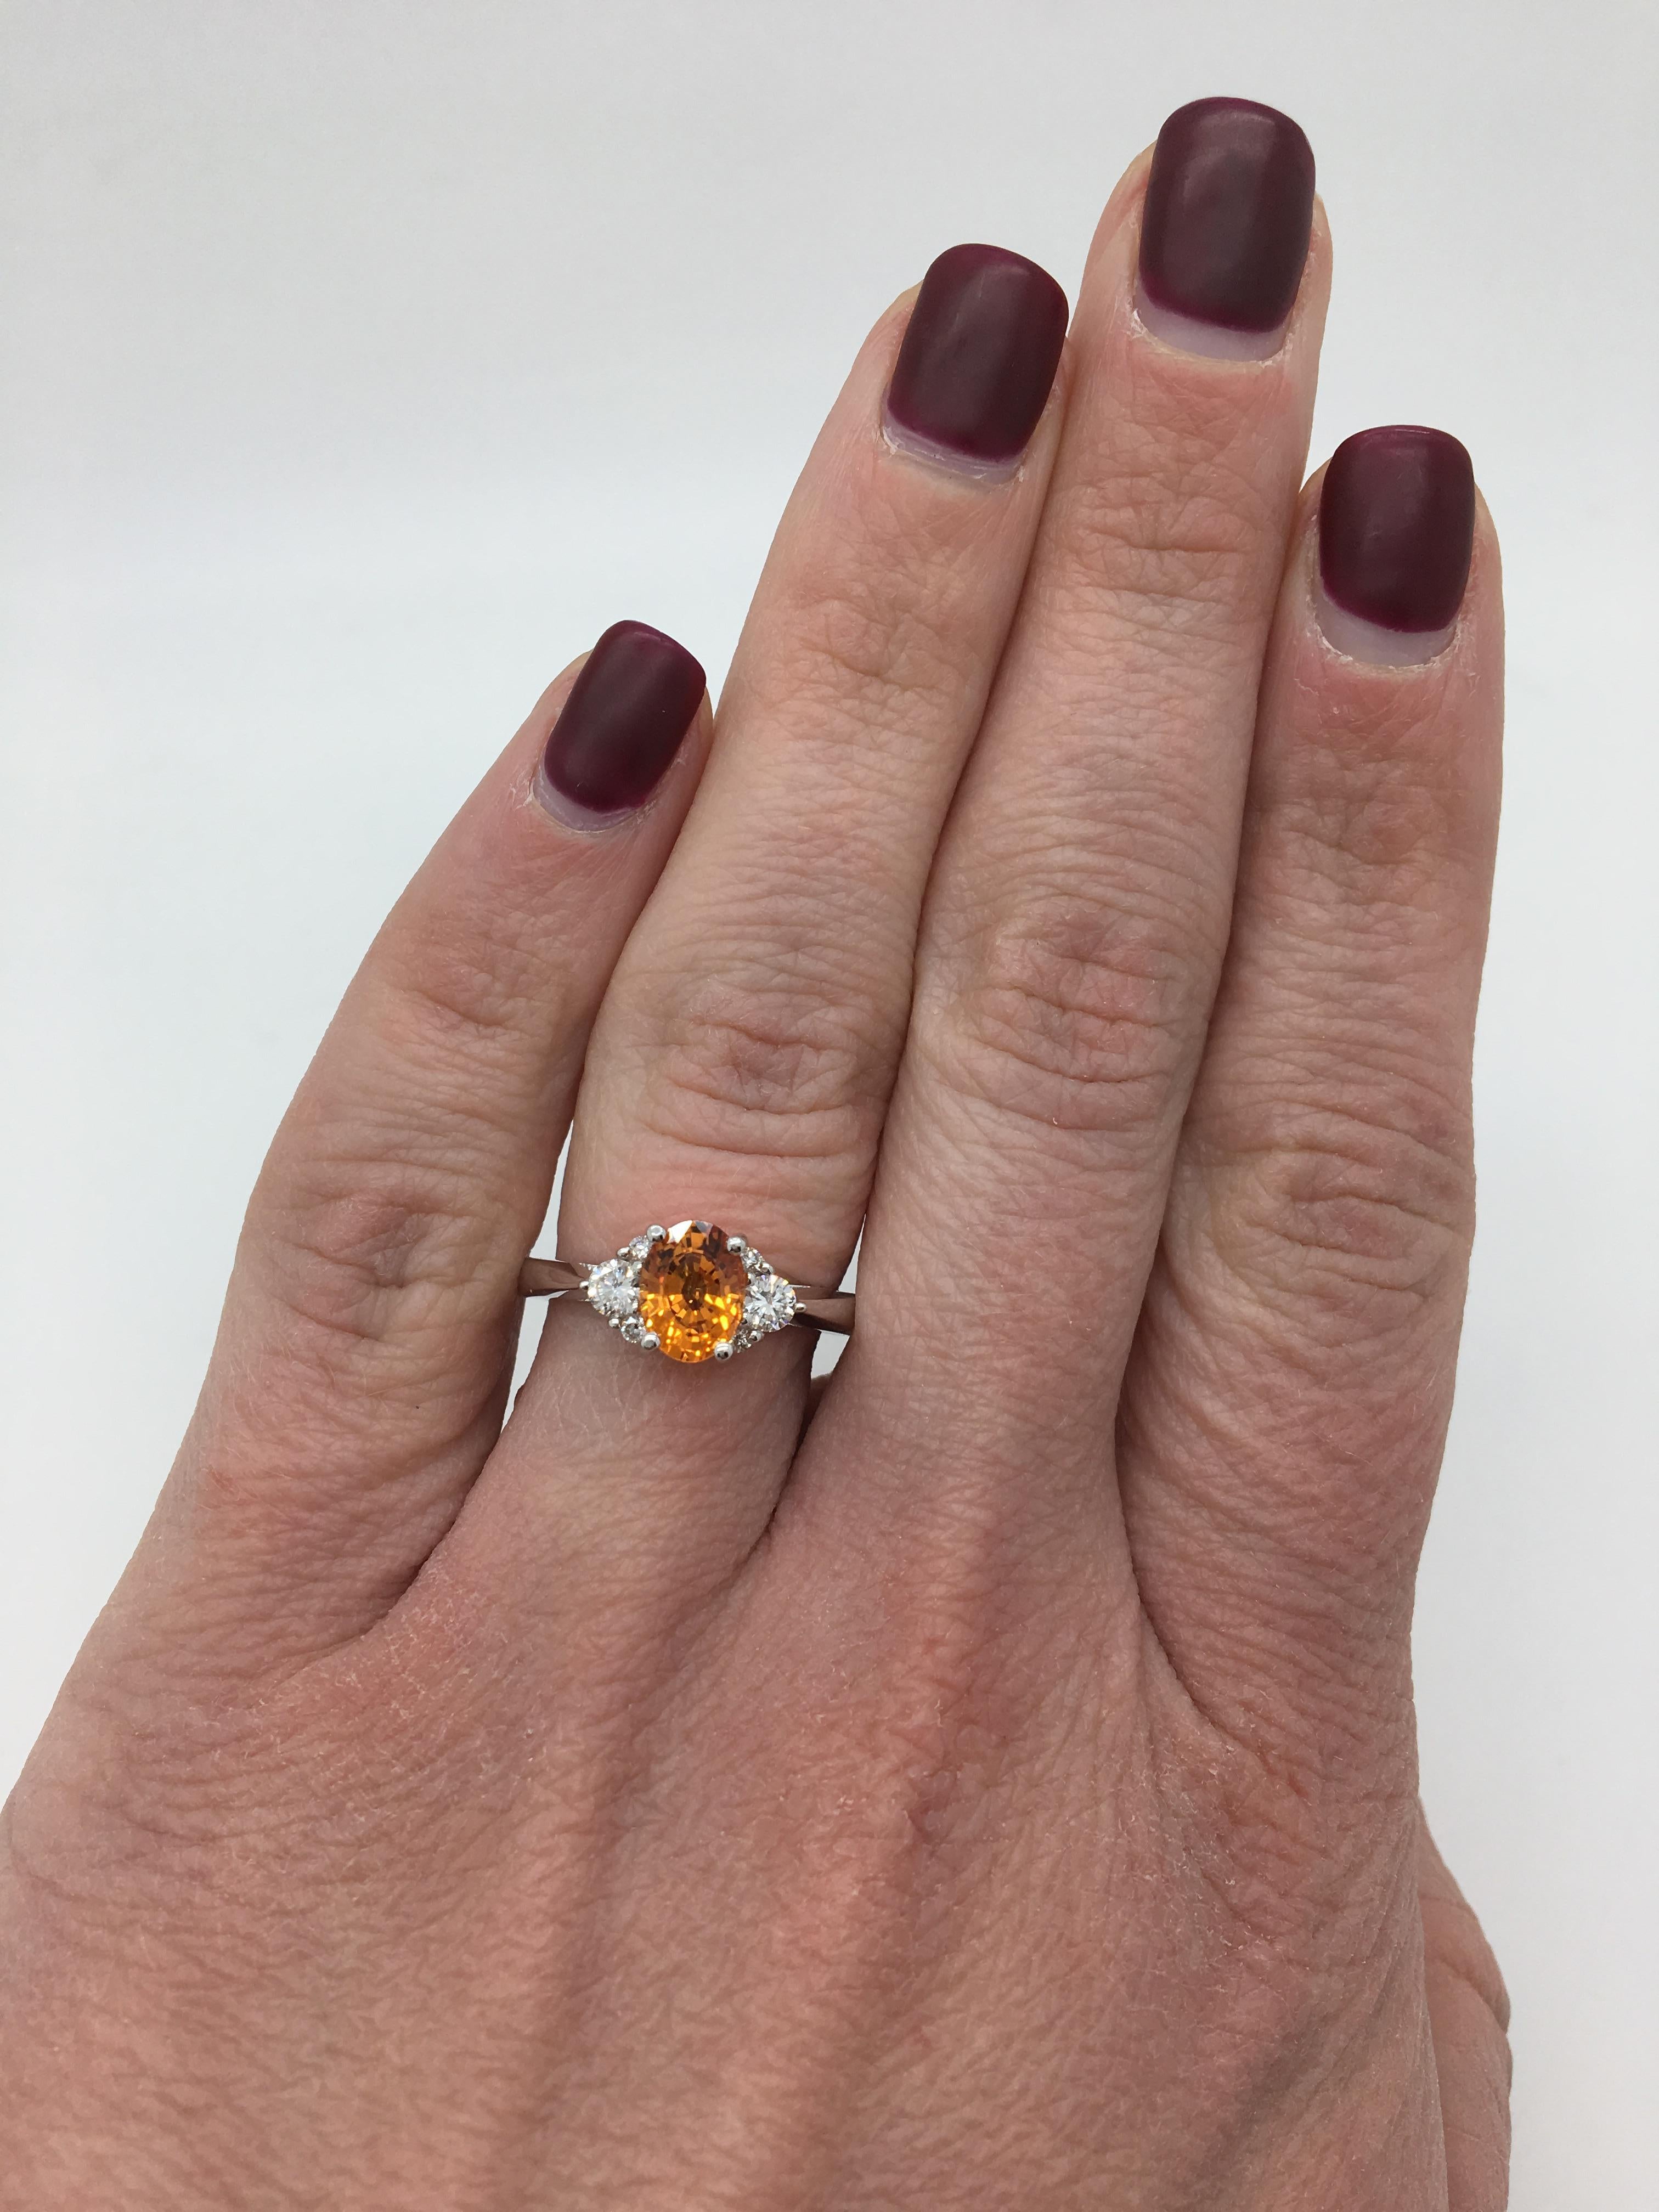 Beautiful Orange Sapphire and Diamond Ring set in 14K white gold.

Gemstone: Orange Sapphire & Diamonds
Gemstone Carat Weight: Oval Cut 1.09CT Orange Sapphire
Diamond Carat Weight: Approximately .25CTW 
Diamond Cut: 6 Round Brilliant
Color: Average